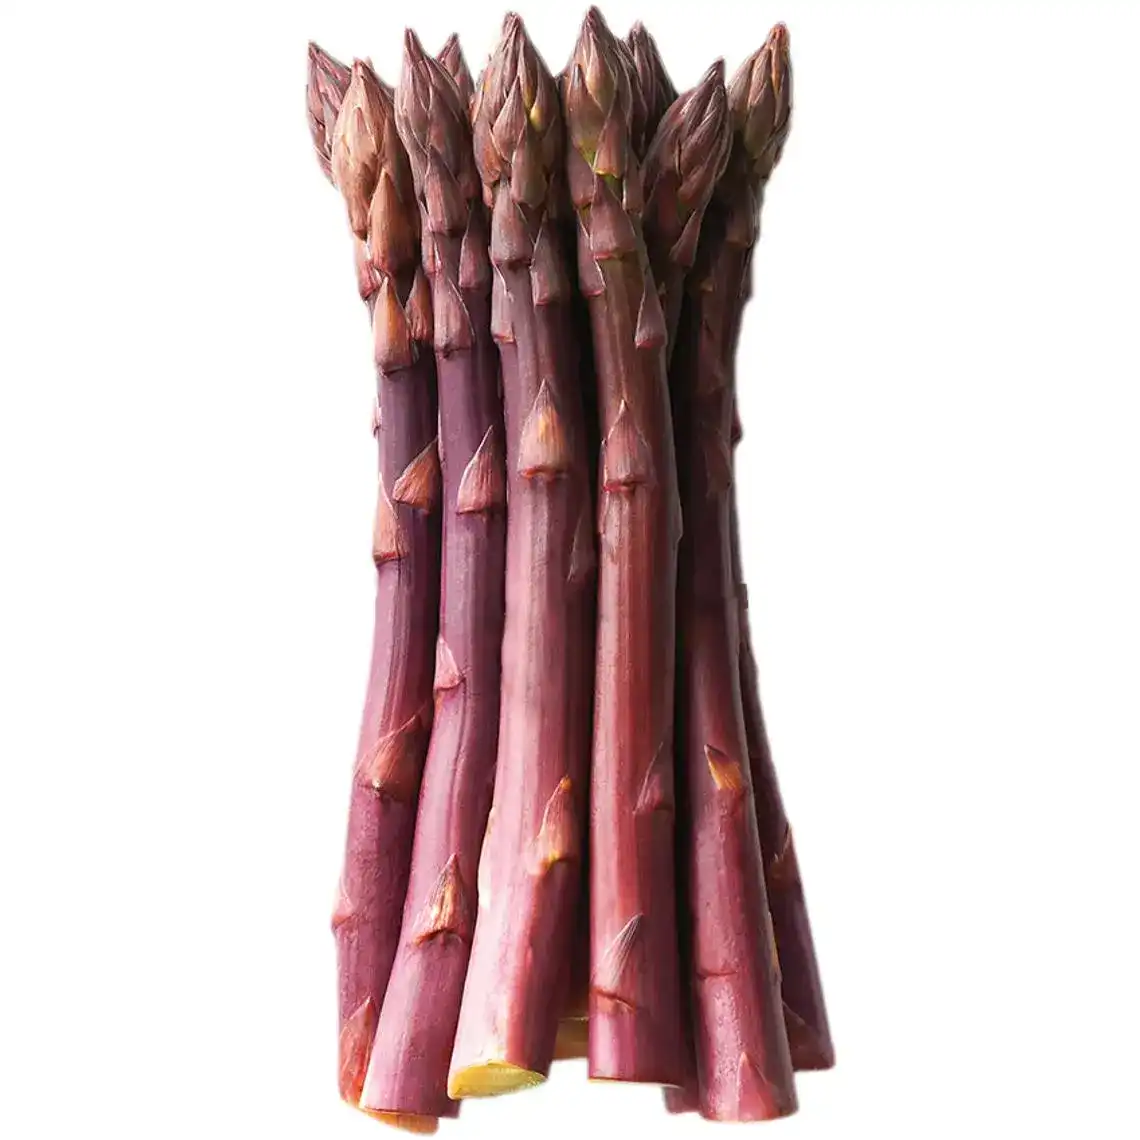 Purple asparagus 350g